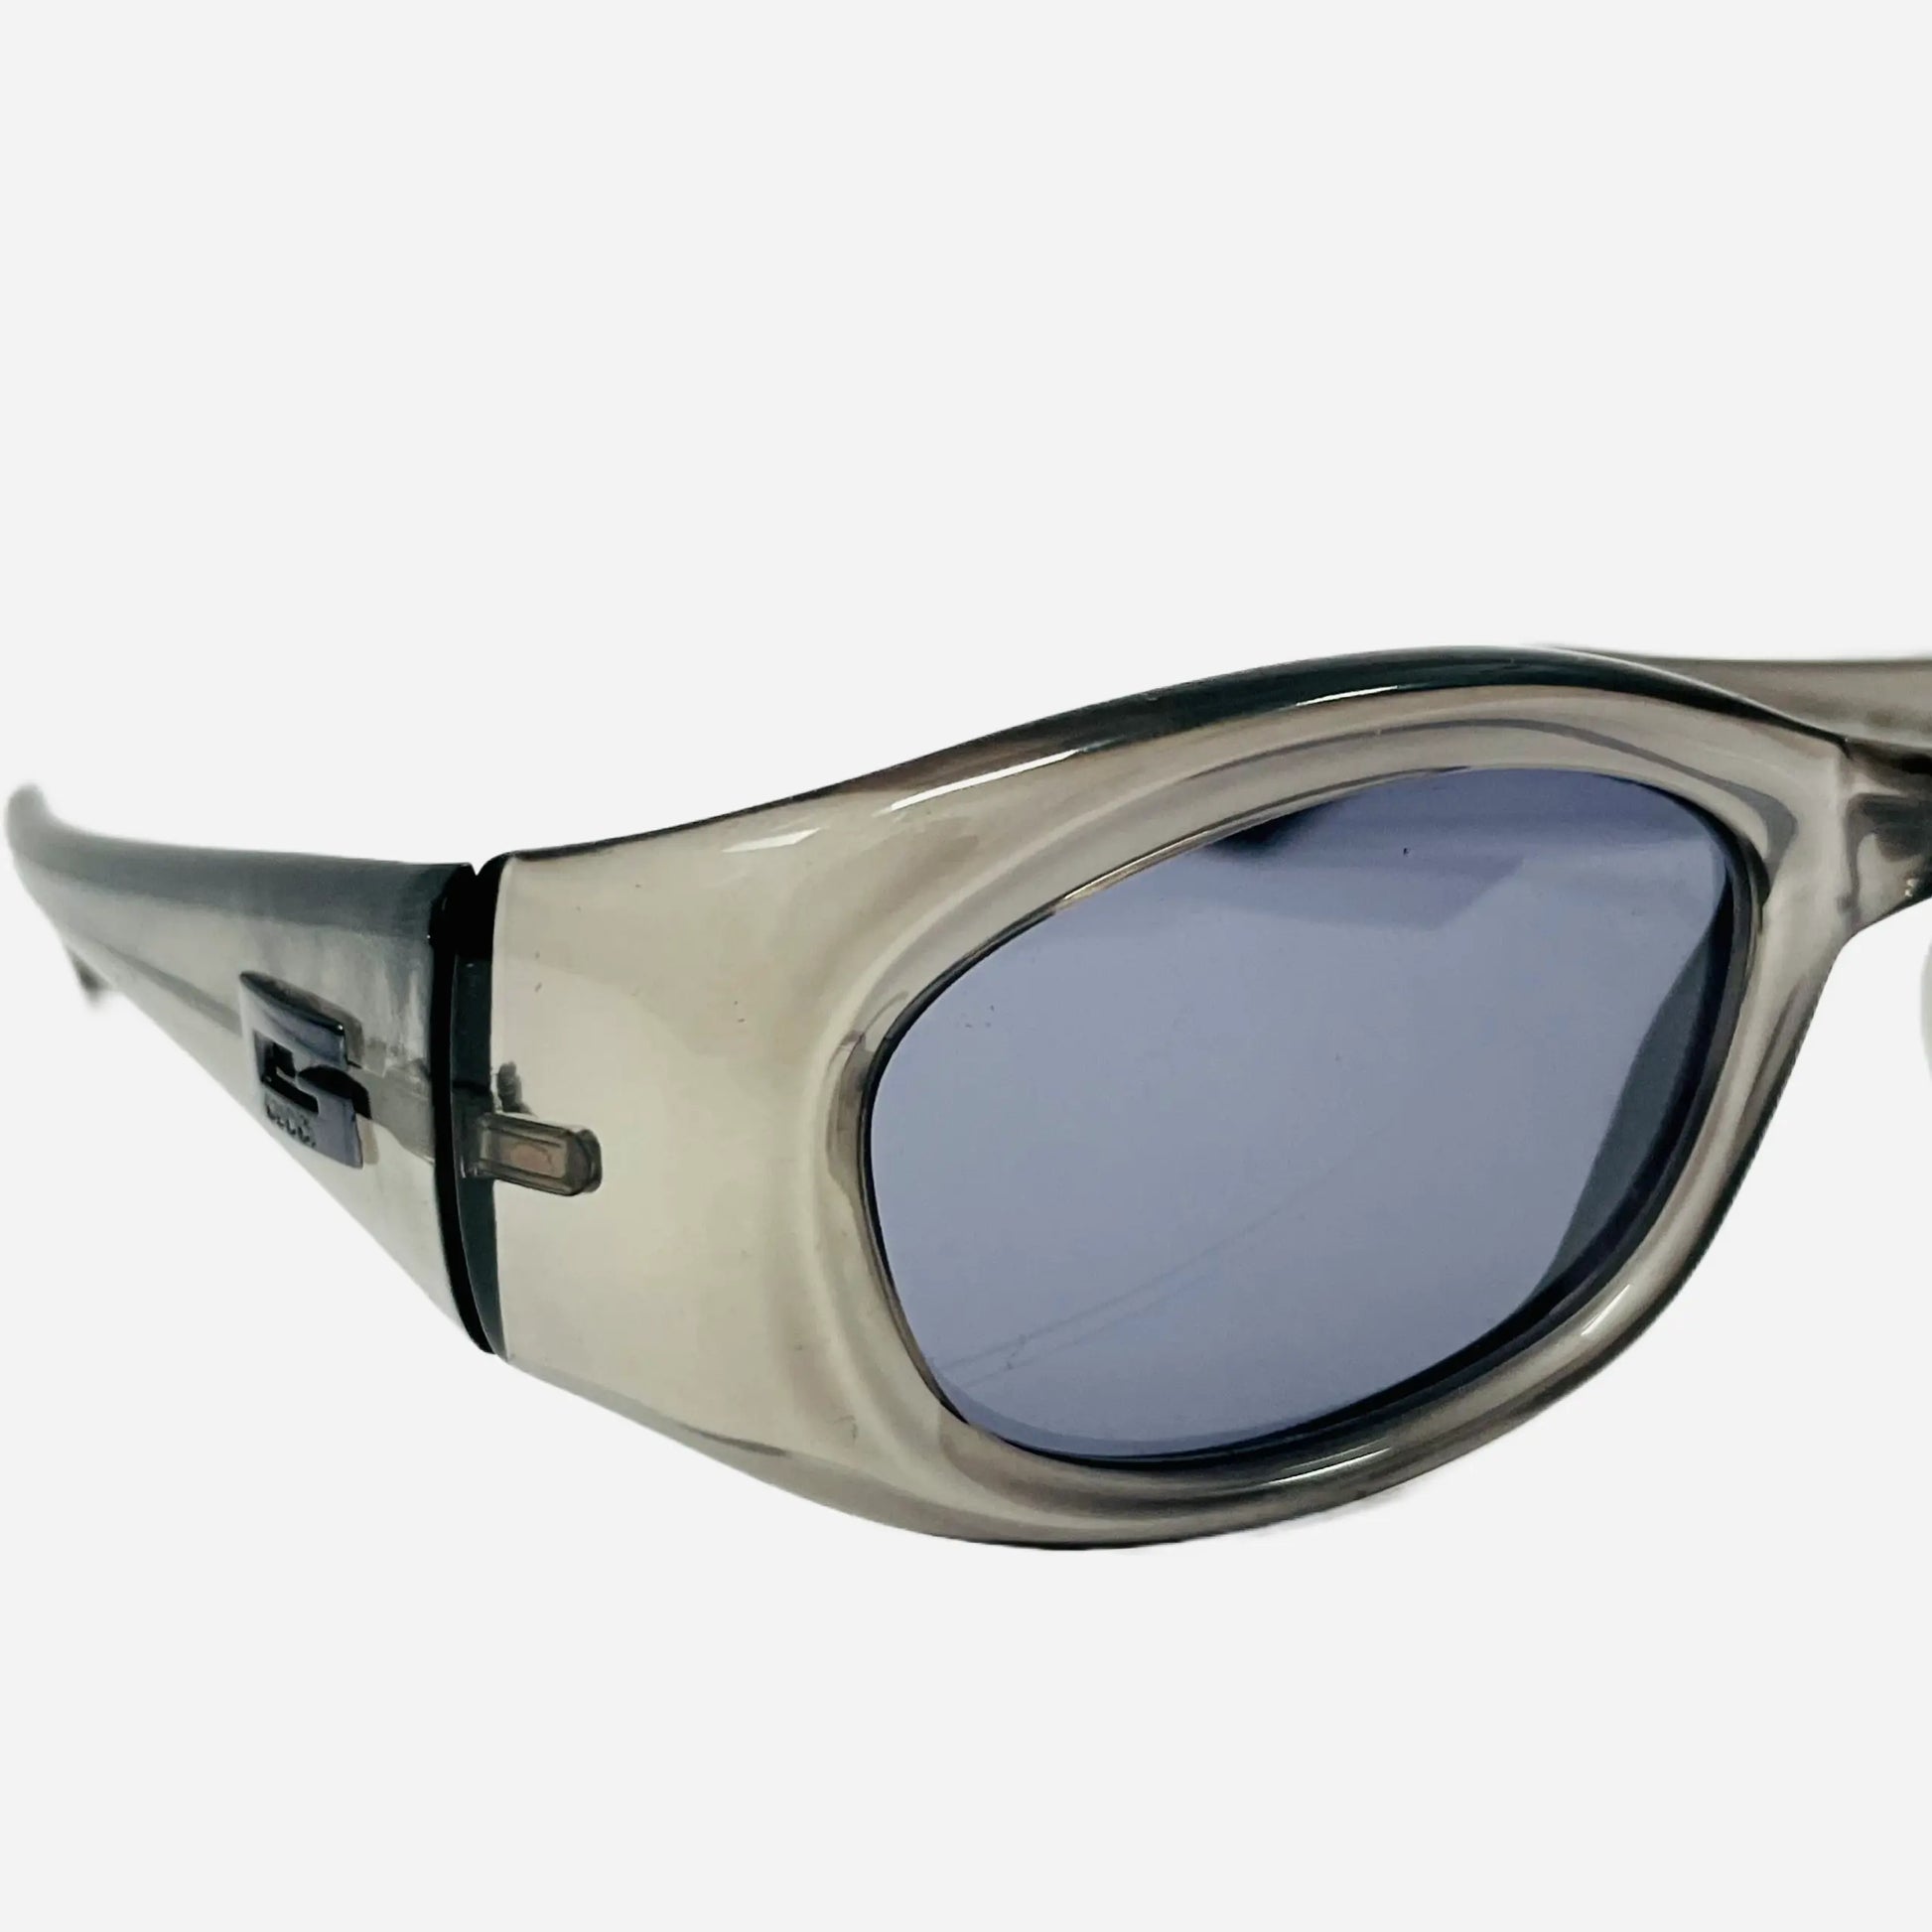 Vintage-Gucci-Sunglasses-Sonnenbrille-Schnelle-Brille-90s-2432-_S-The-Seekers-front-side-detail-left